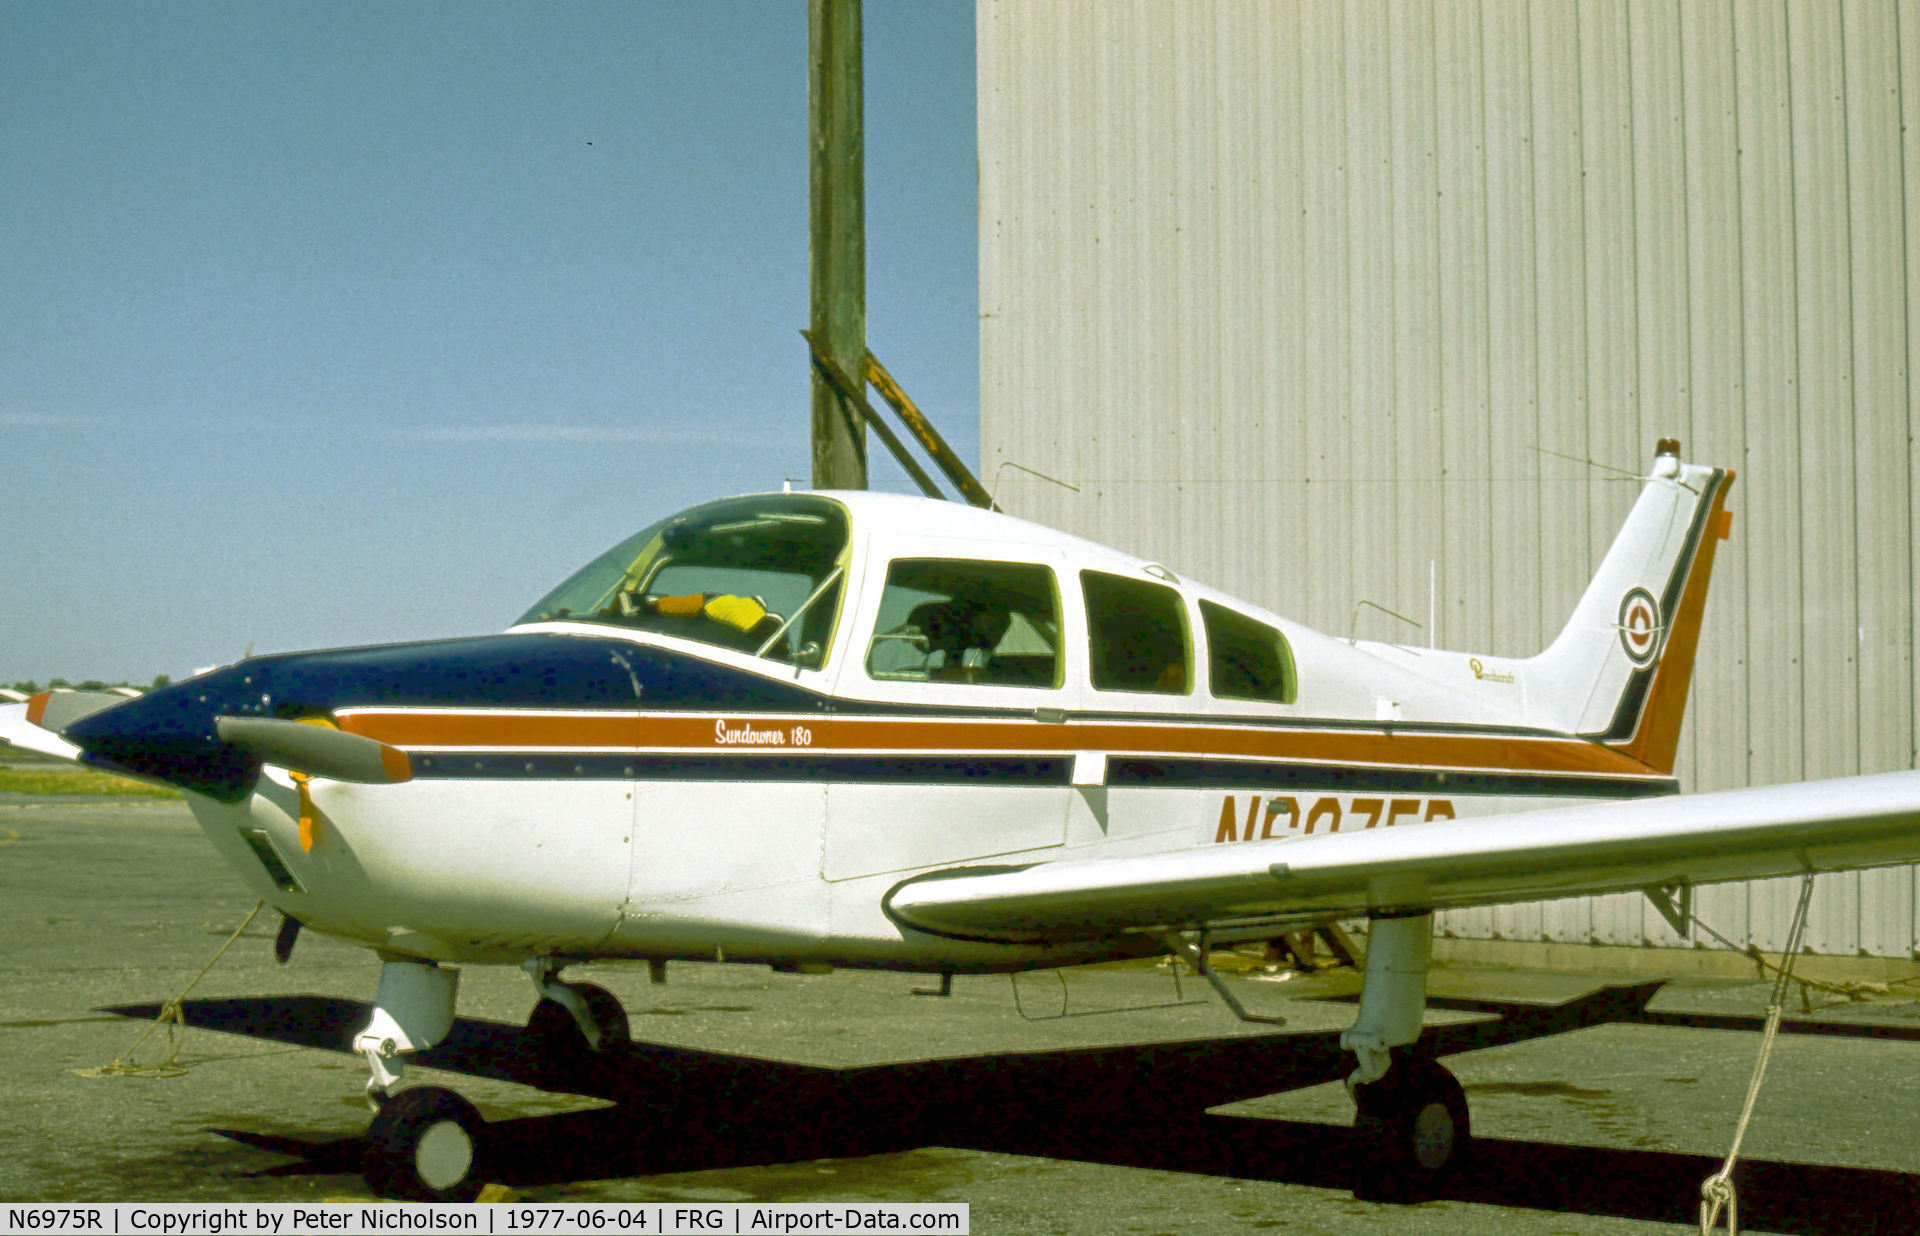 N6975R, Beech C23 Sundowner 180 C/N M-1586, Beech C23 Sundowner 180 resident at Republic Airport on Long Island in the Summer of 1977.